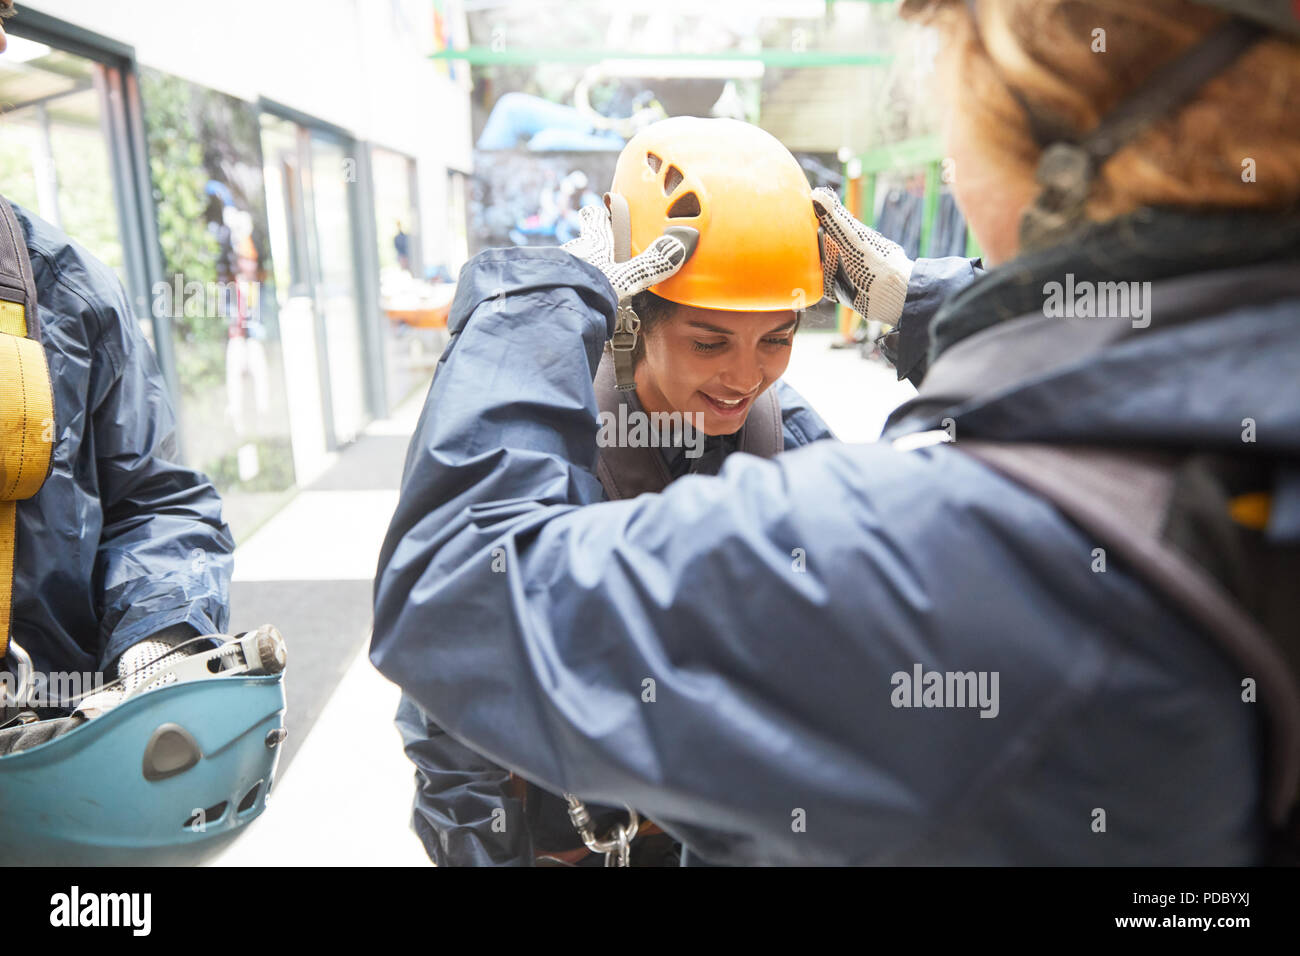 Woman helping friend with zip line helmet Stock Photo